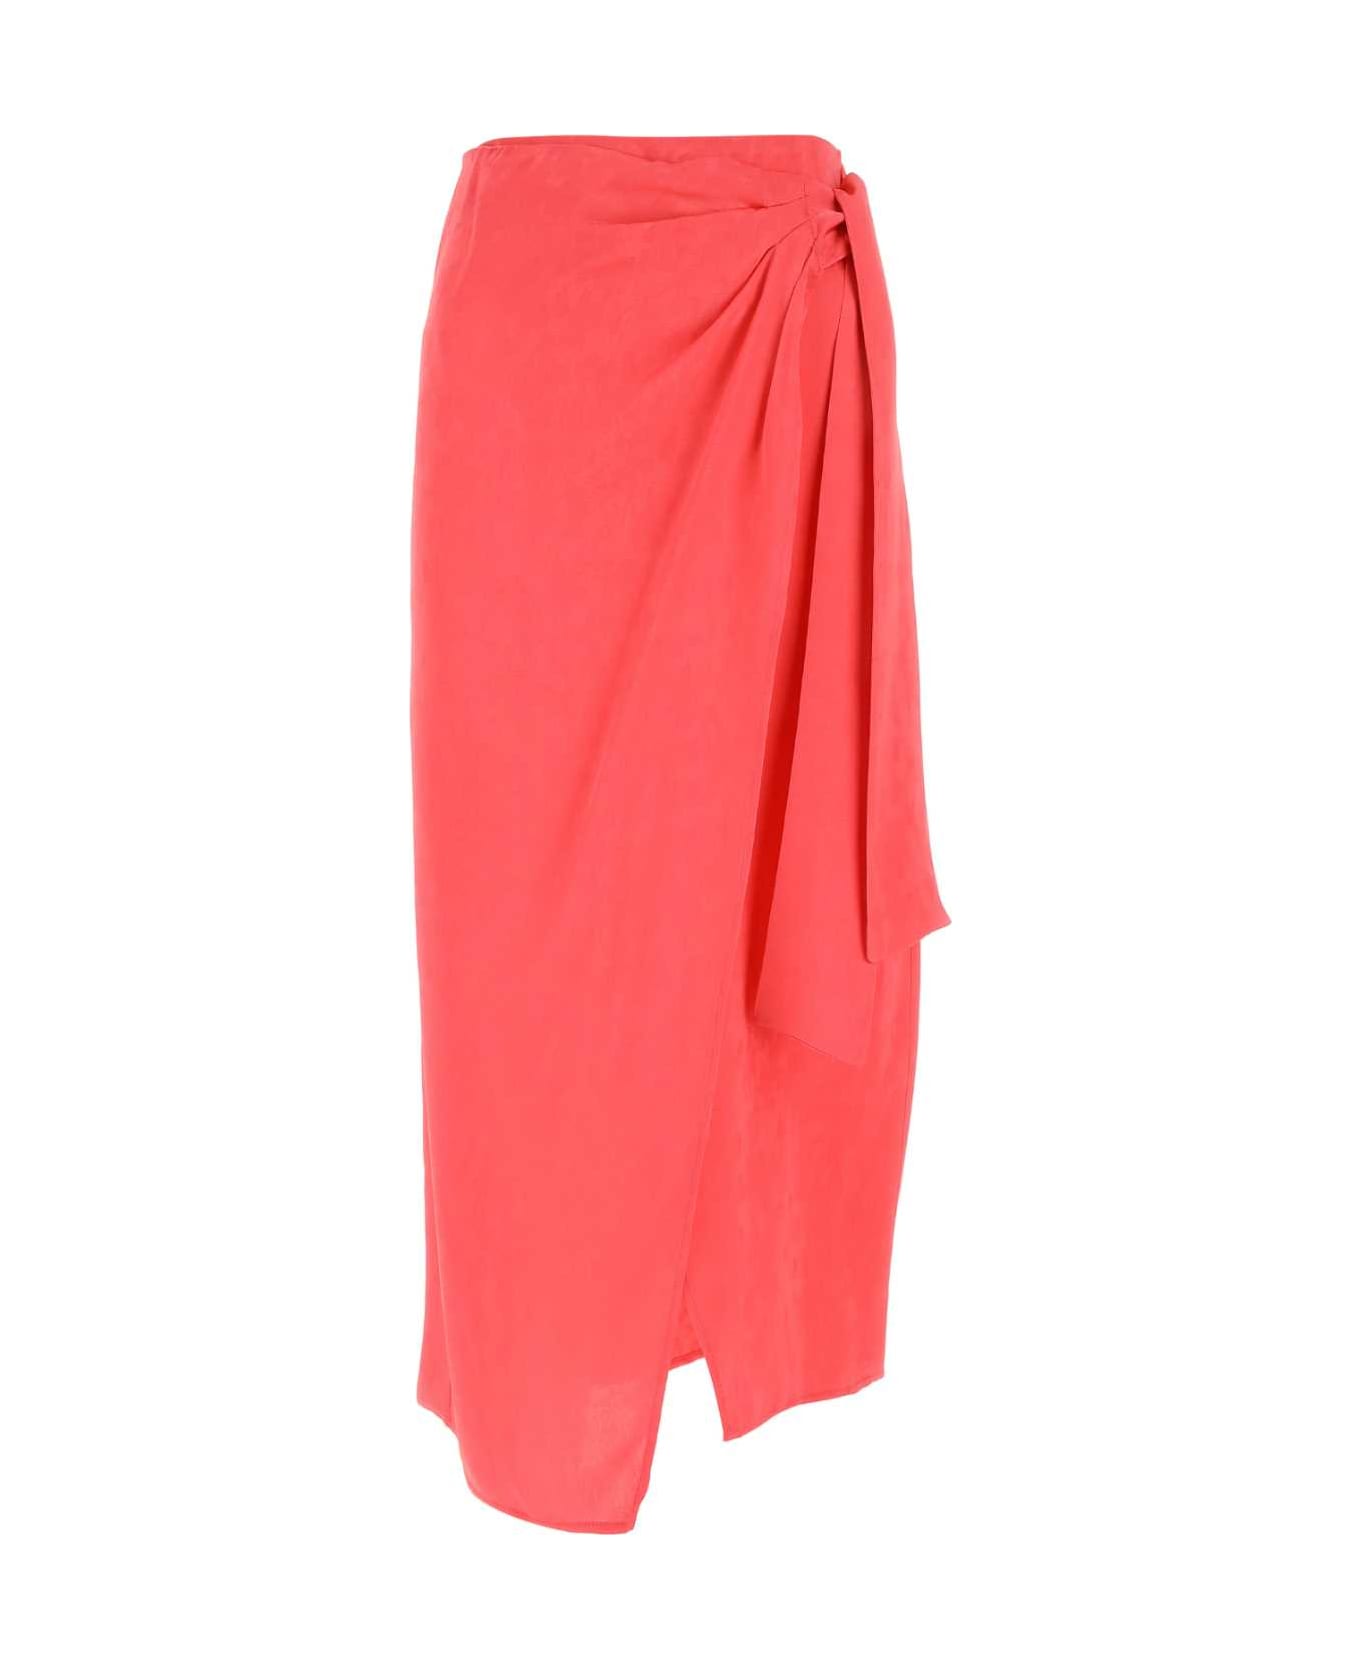 MSGM Coral Satin Skirt - 13 スカート